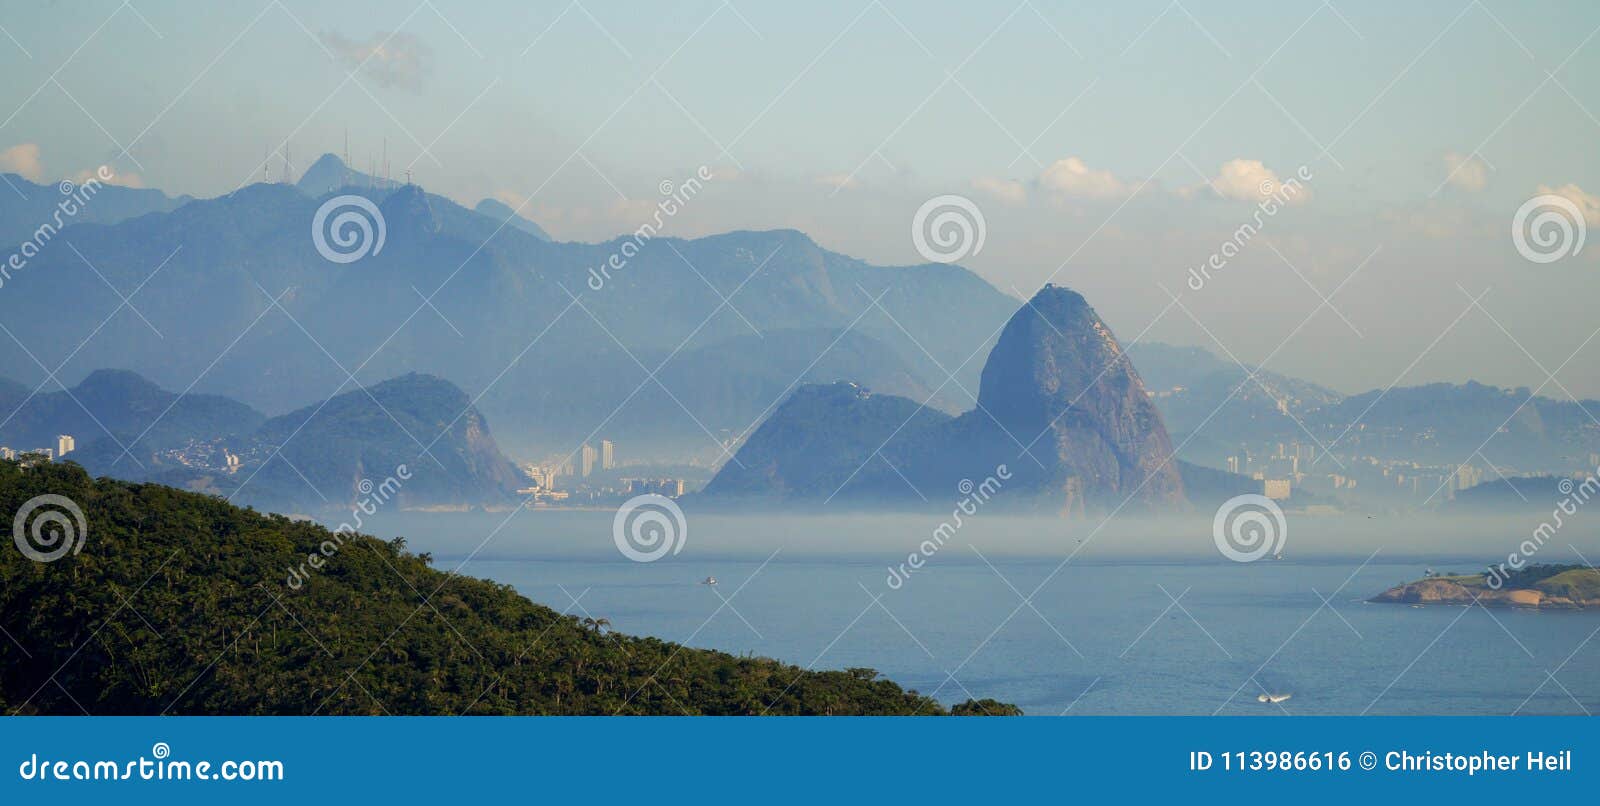 the view towards rio de janeiro and sugar loaf mountain from itacoatiara in niteroi, brazil.